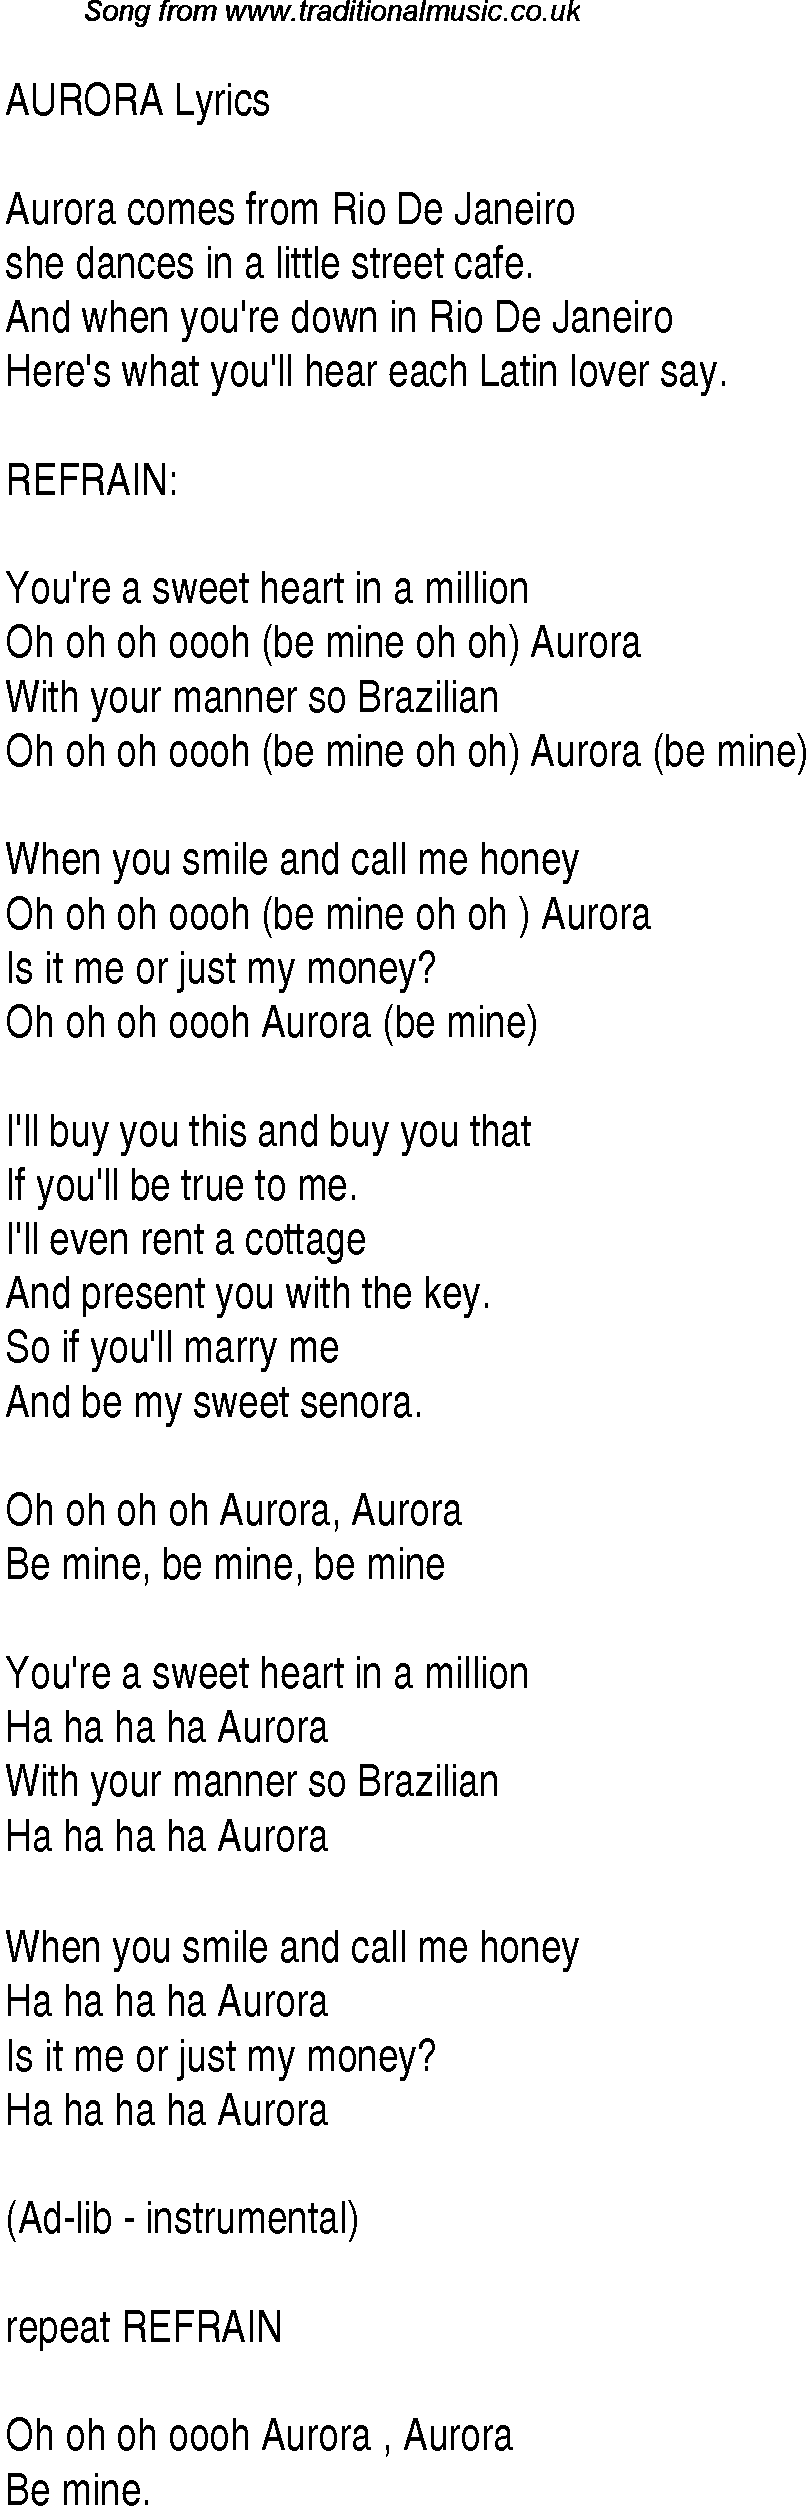 1940s top songs - lyrics for Aurora(Andrews Sisters)